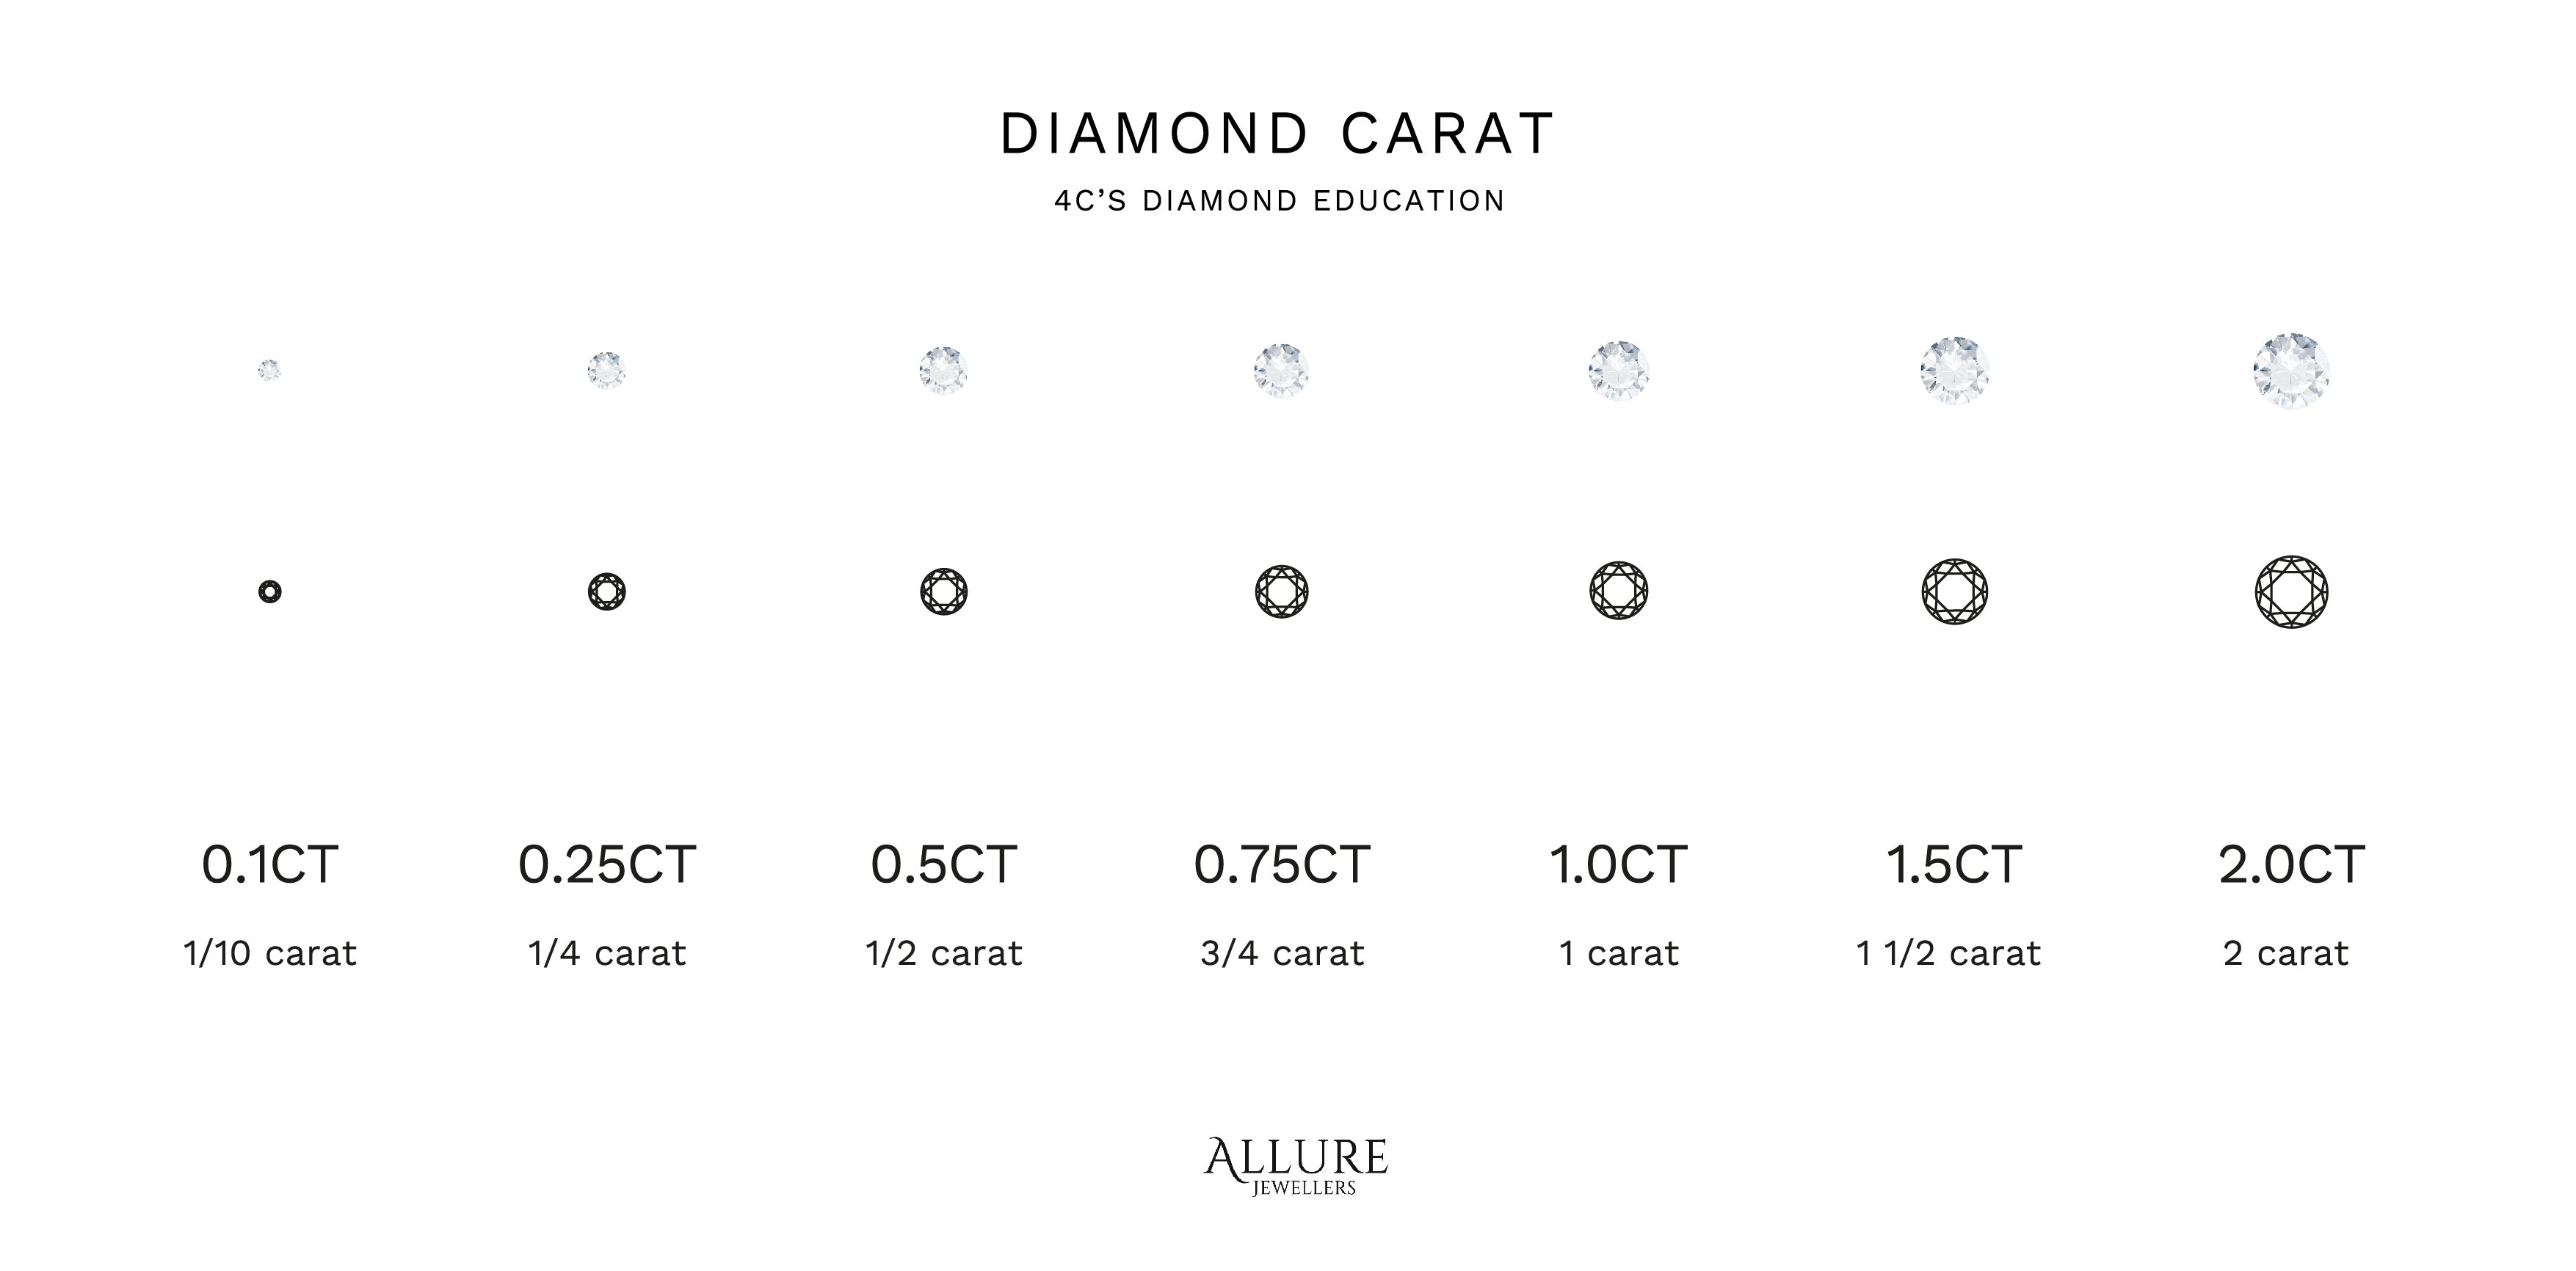 Allure Jewellers 4C's Education - Diamond Carat